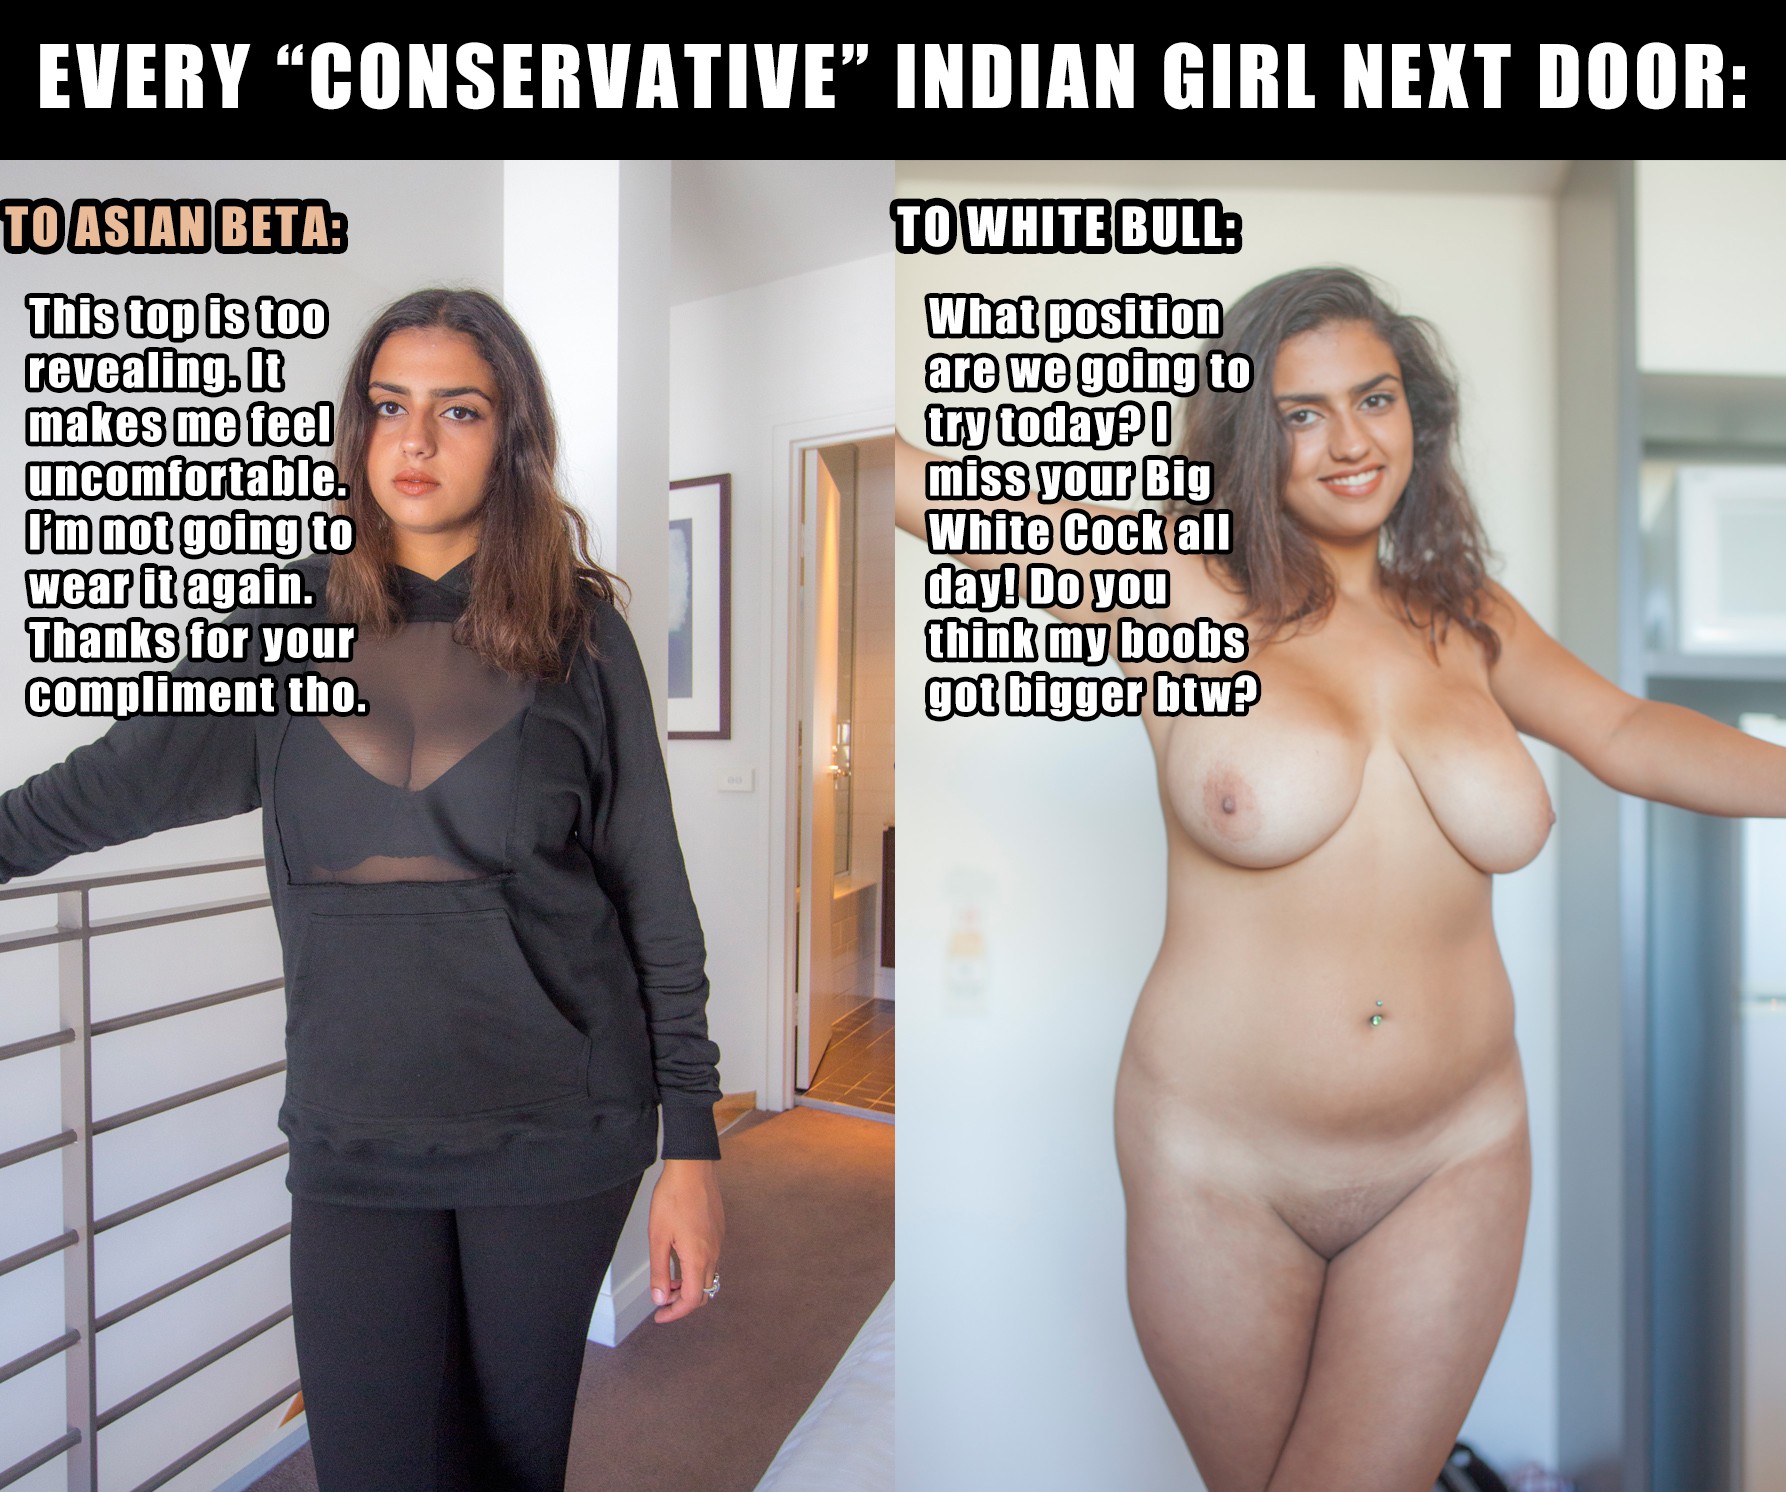 Bull Girl Sex Com - Indian girl next door reacts to white bull cock vs beta dick - Freakden